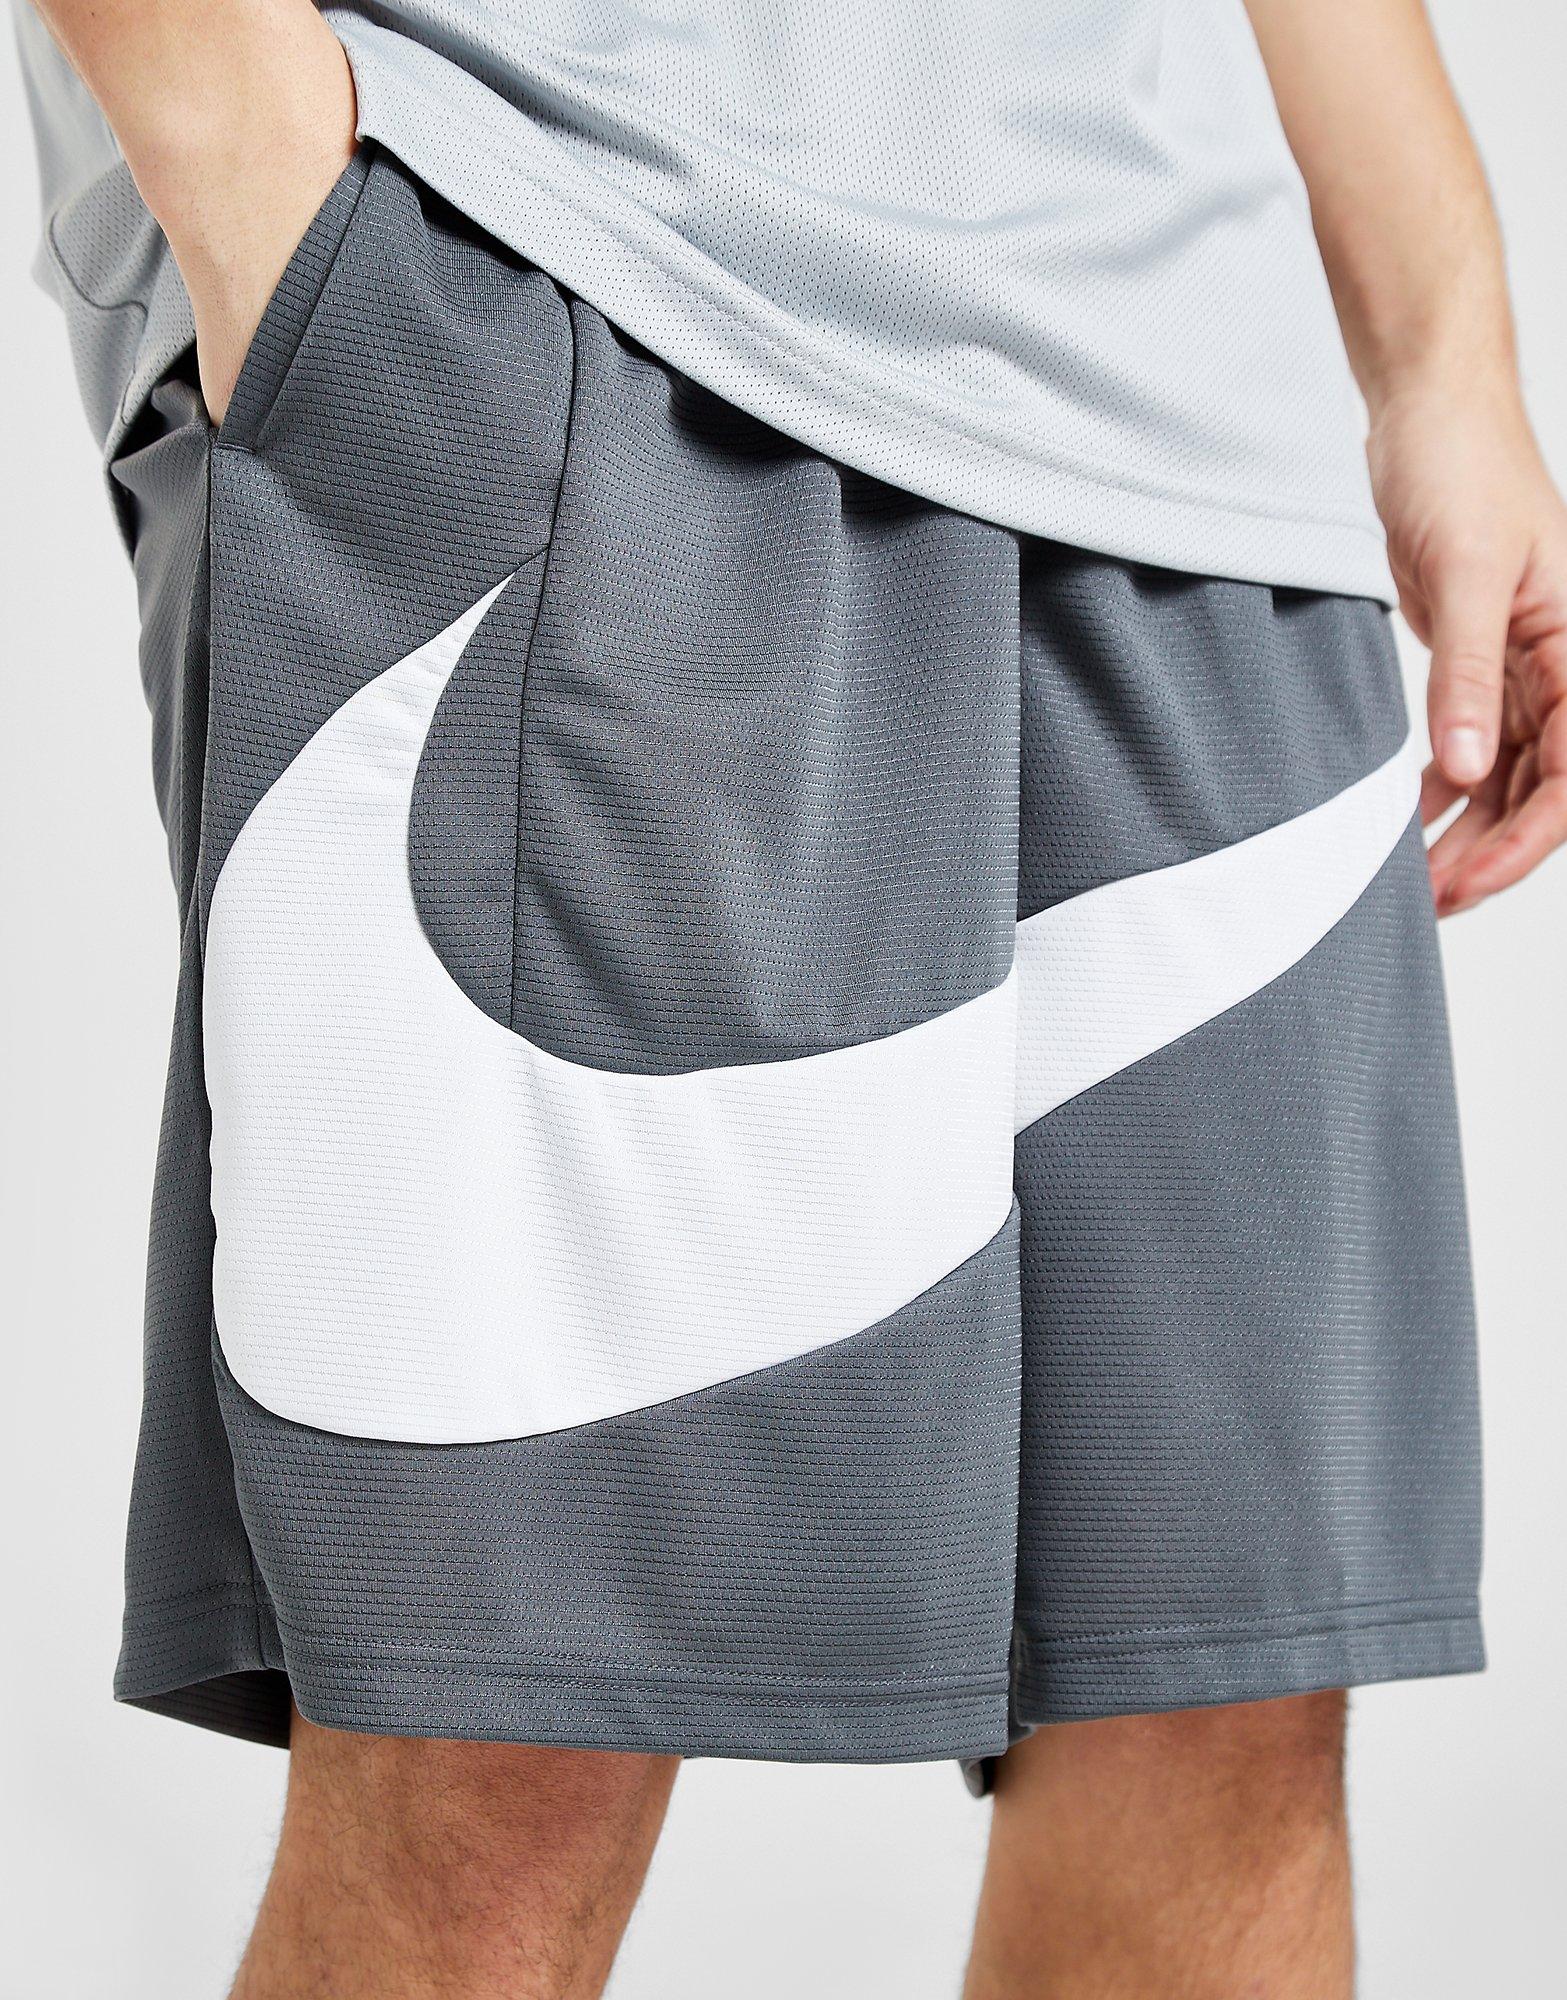 Nike Hybrid Basketball Shorts